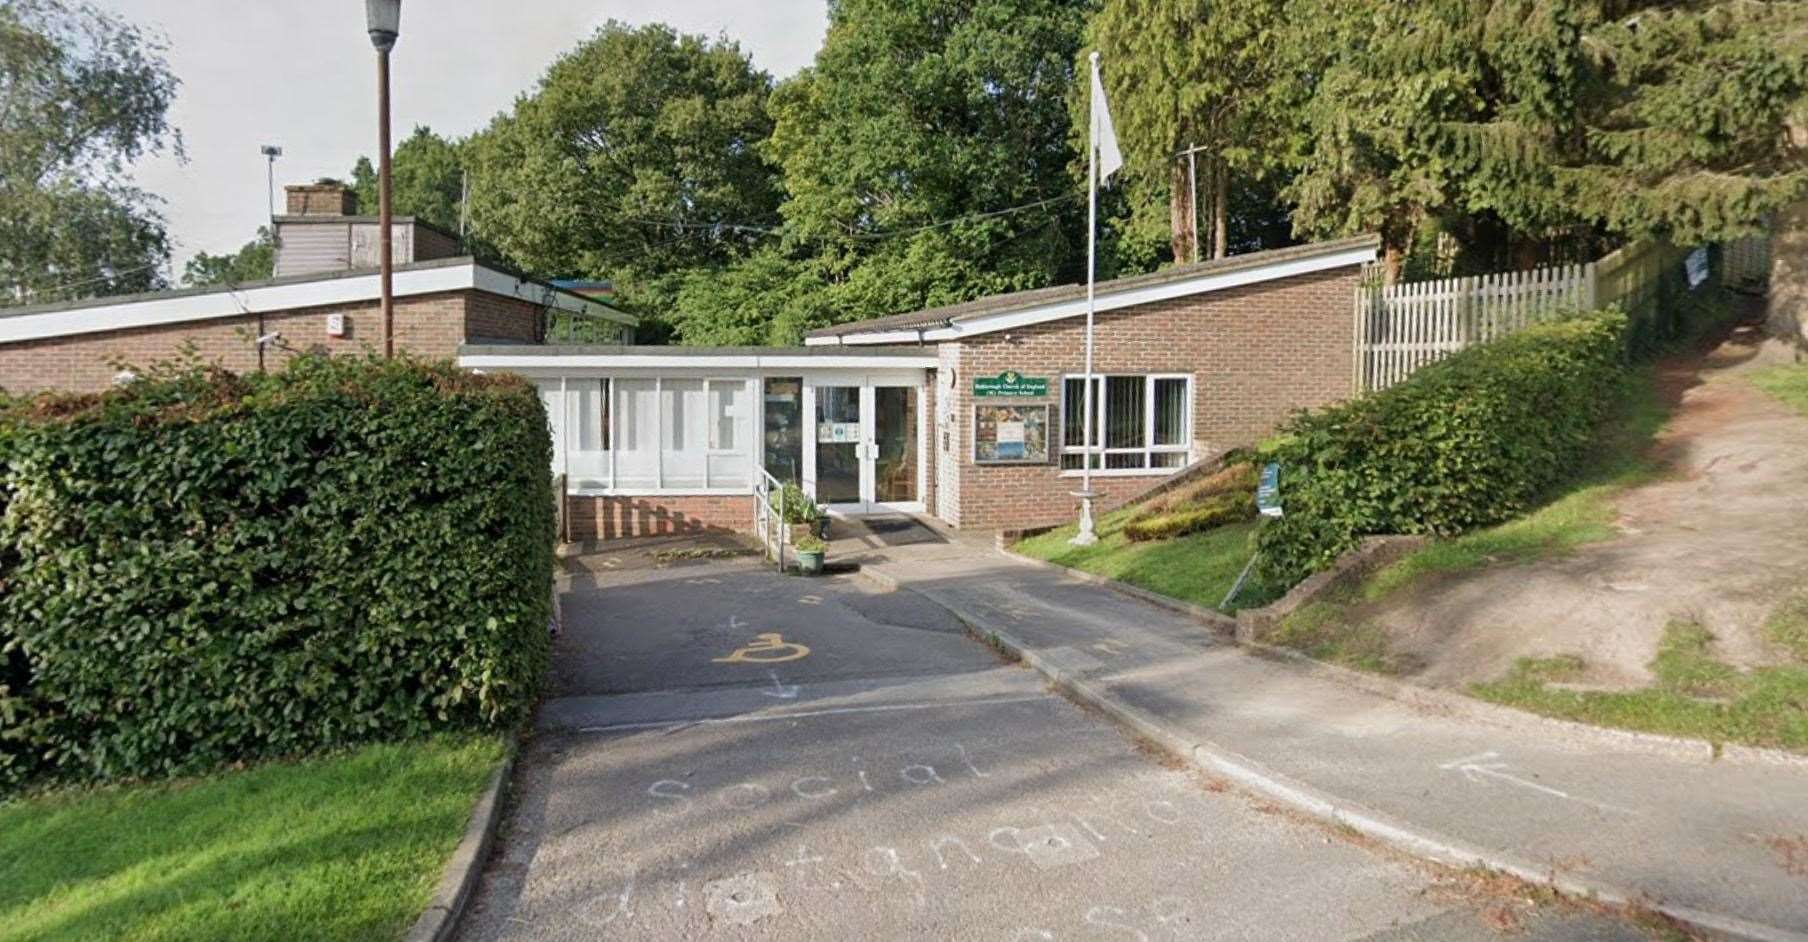 Bidborough CofE Primary School in Spring Lane, Bidborough. Picture: Google Streetview